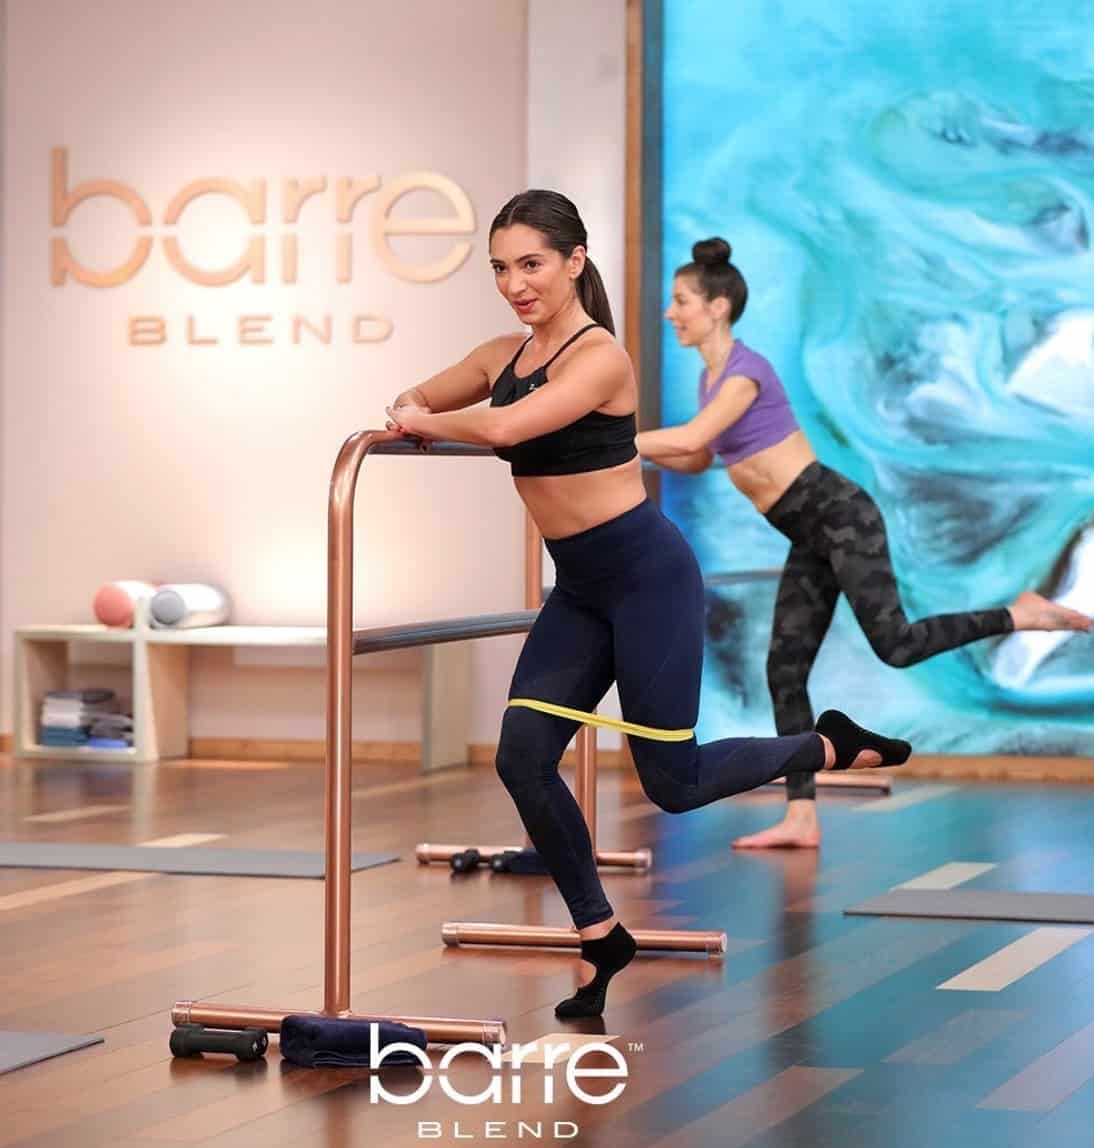 Barre Blend Workout Leg Lift